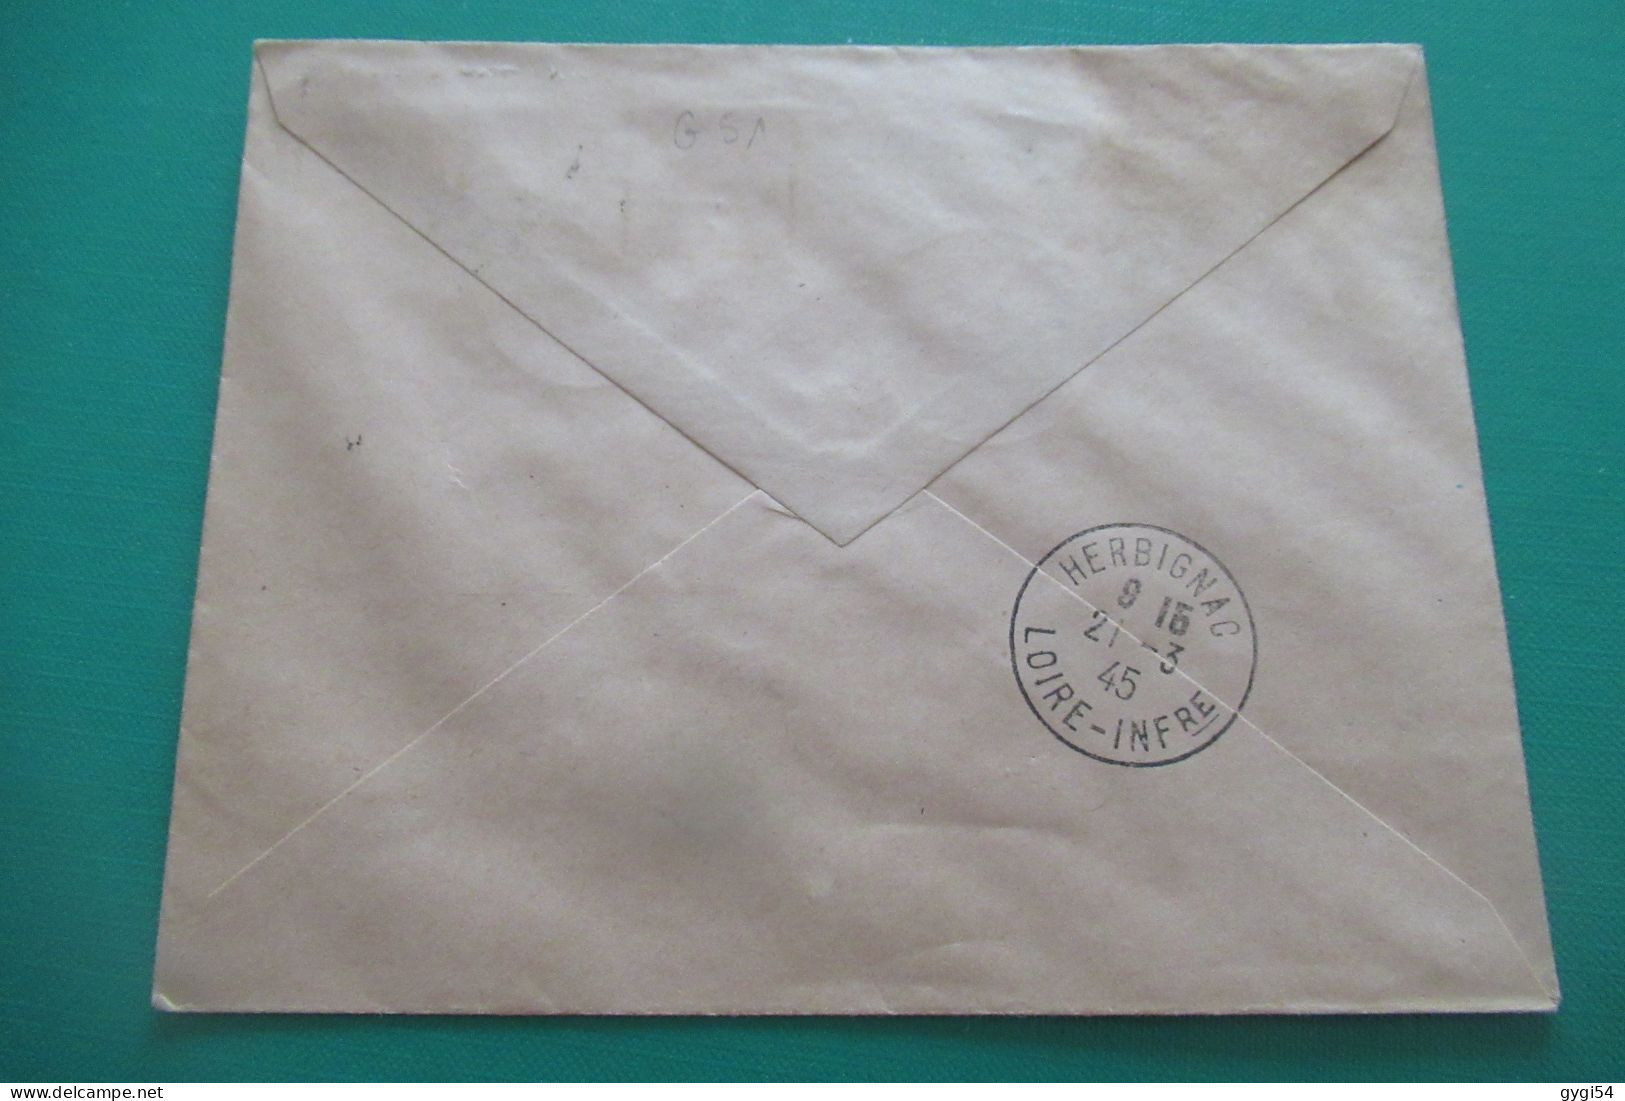 LIBERATION Lettre Recommandée En Expres  Taxe Perçue  GUERANDE 19 03 1945 - Libération